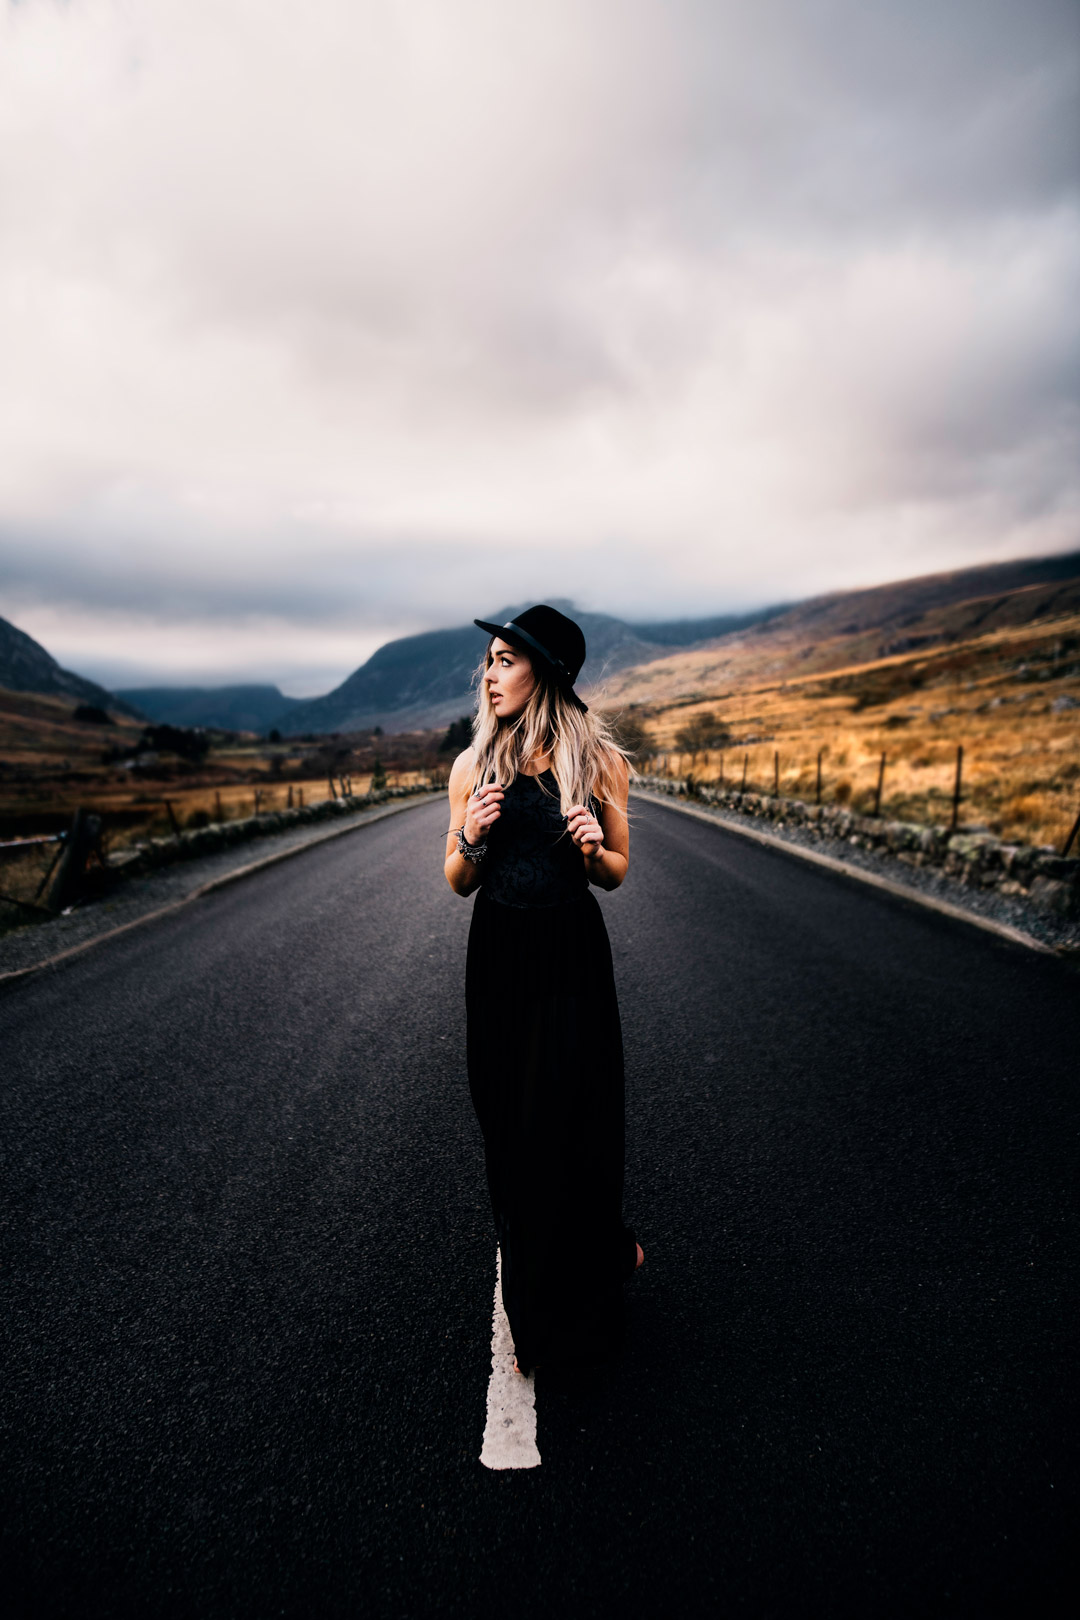 woman waring black dress in open road near large mountains